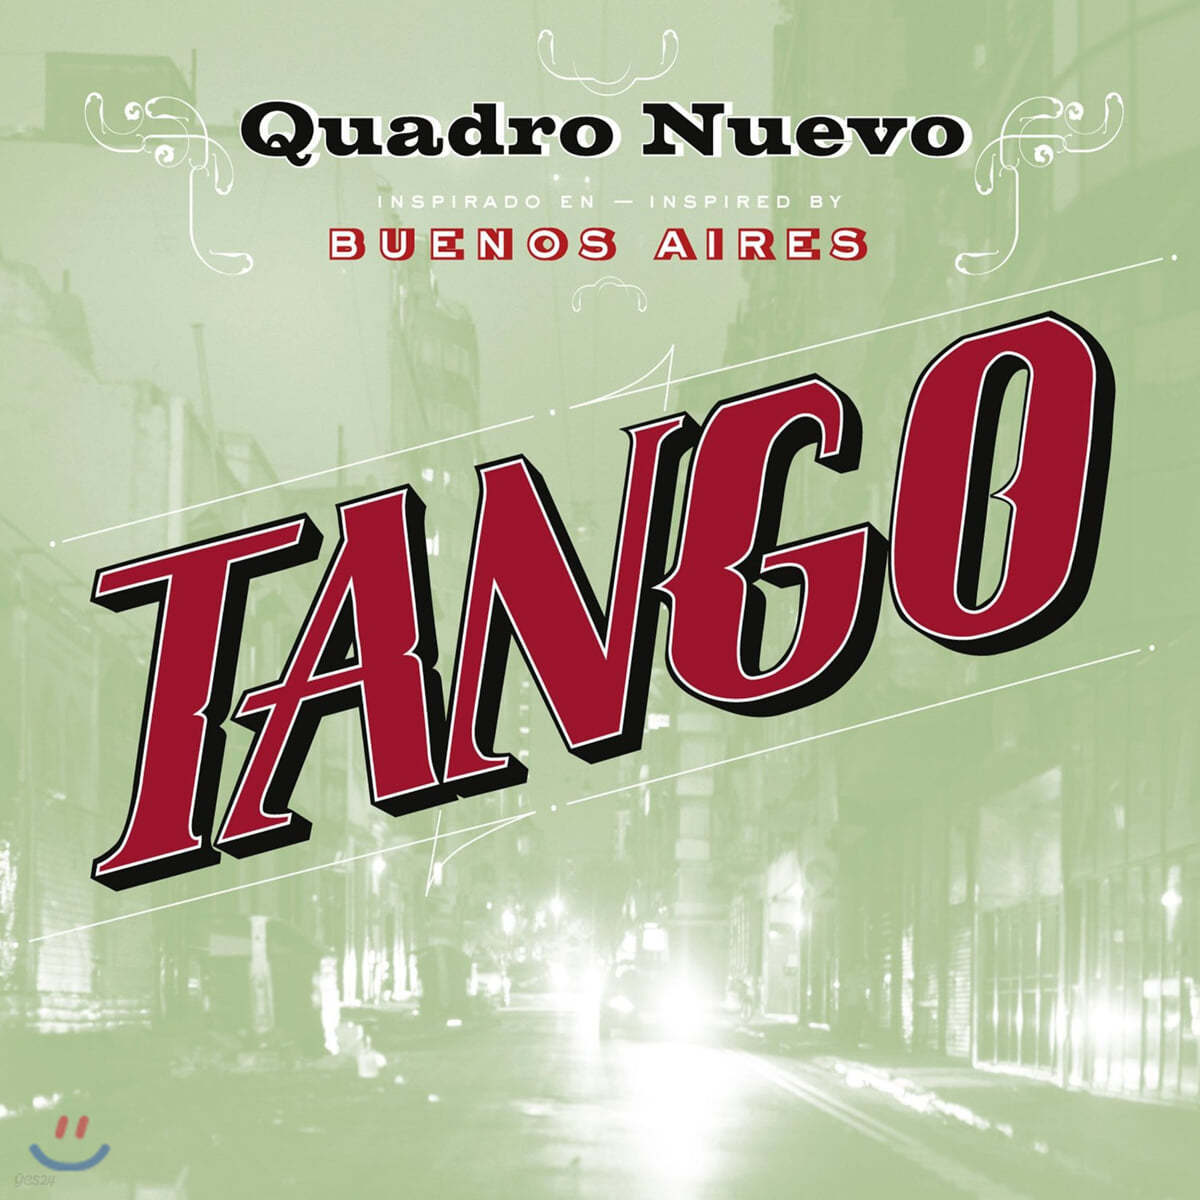 Quadro Nuevo (콰드로 누에보) - Tango